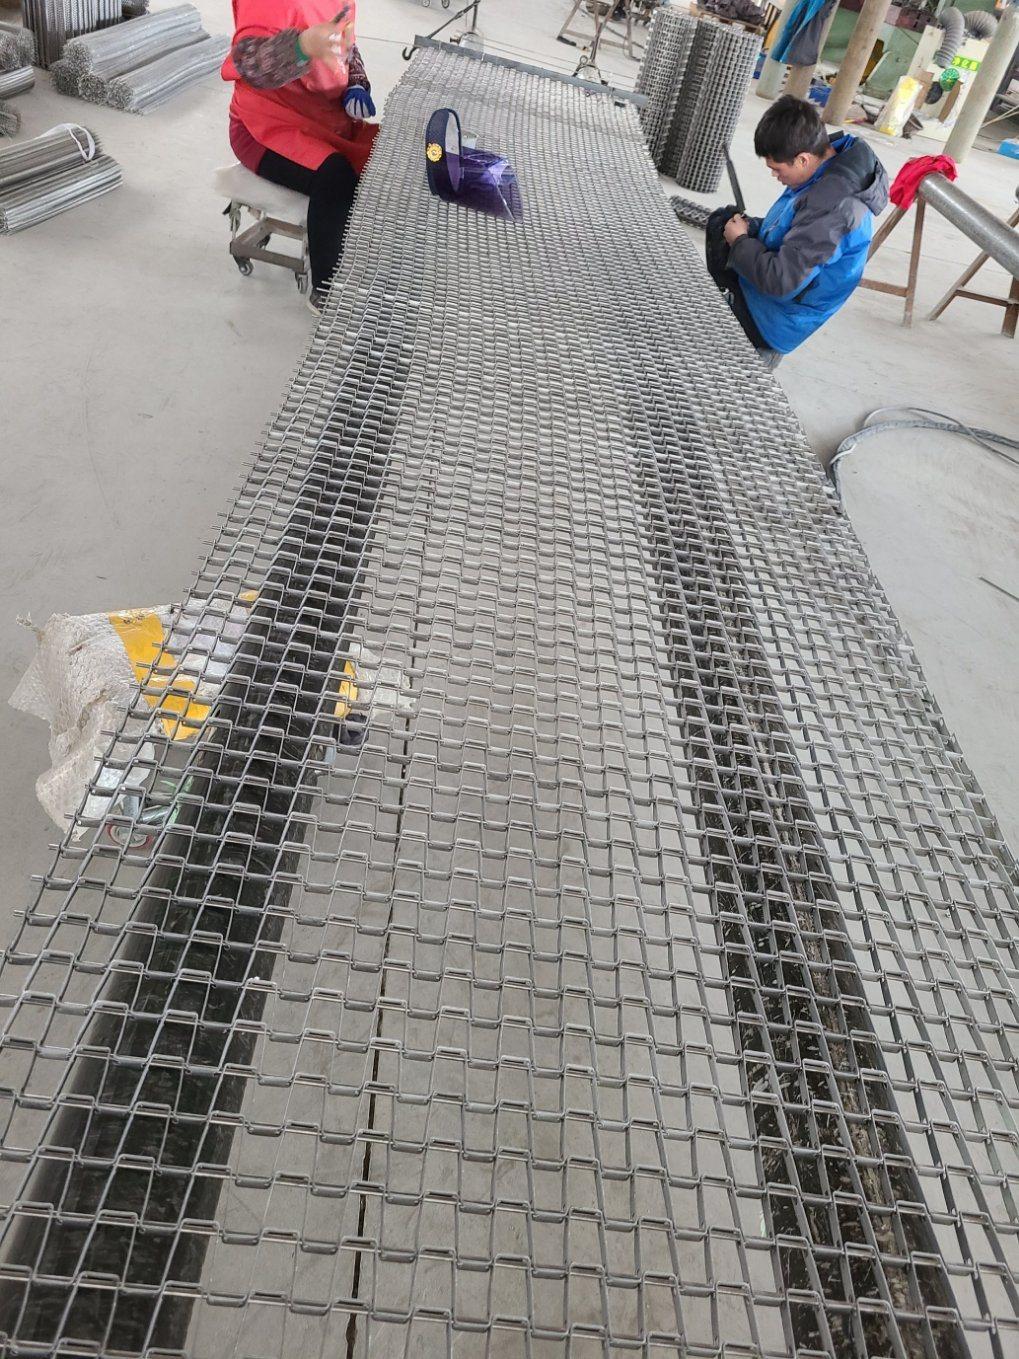 Spiral Wire Mesh Belt /Dutch Compound Balanced Weave Metal Conveyor Belt Mesh